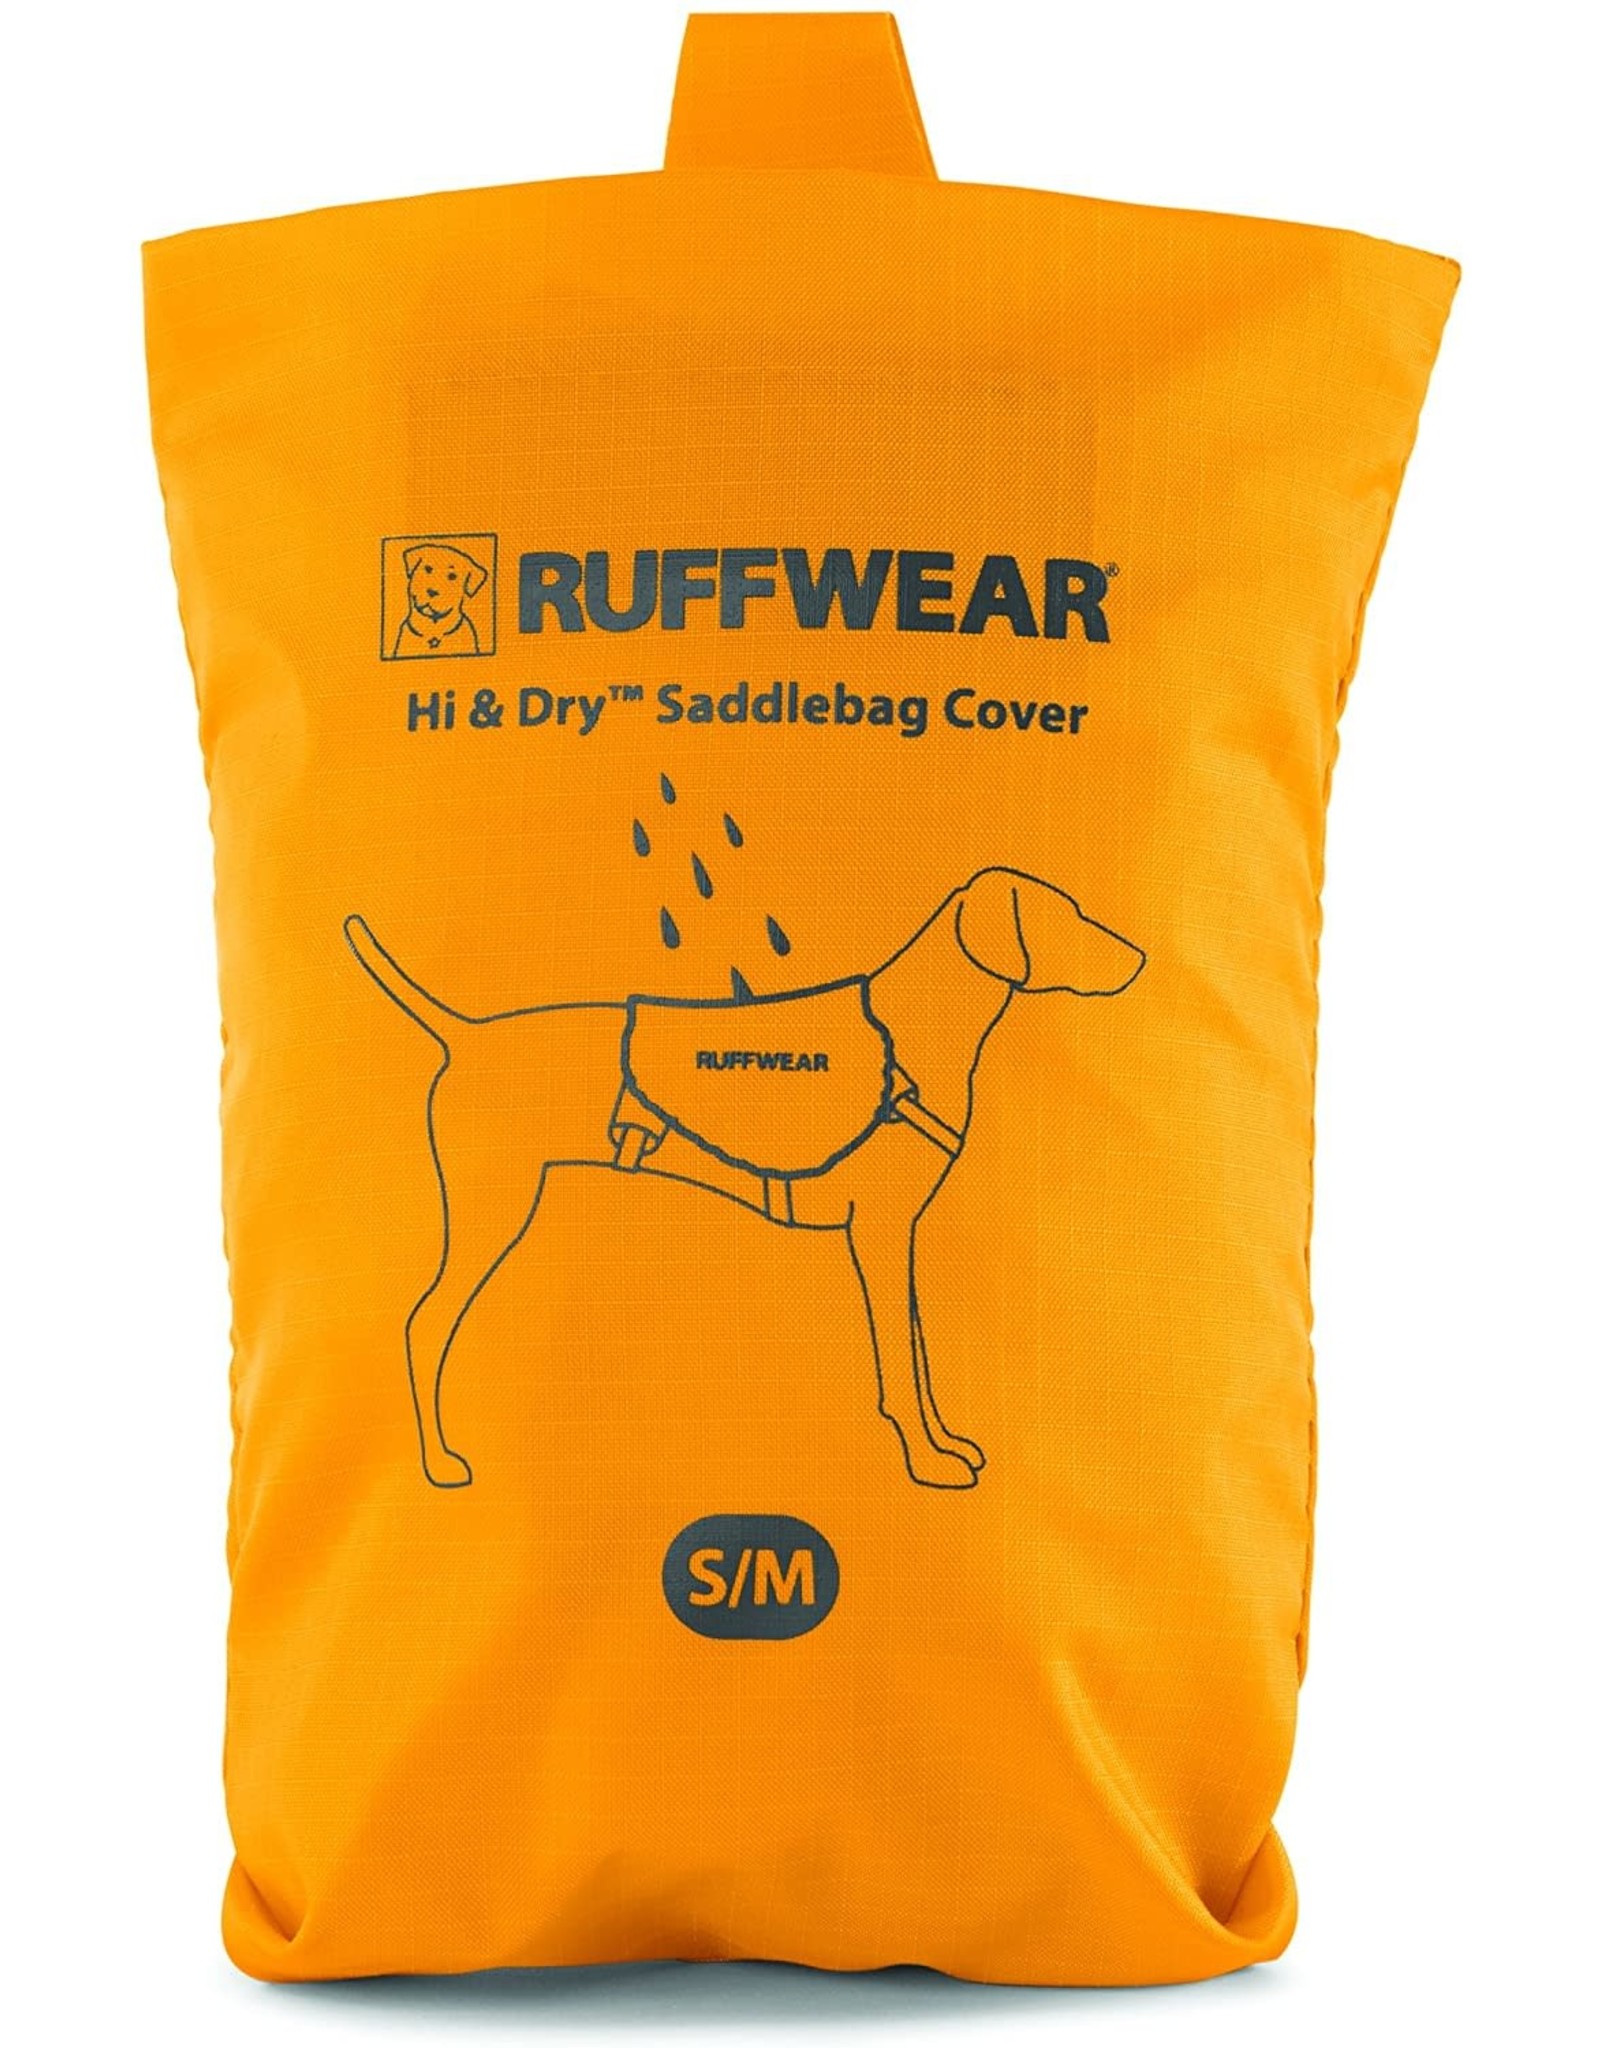 Hi & Dry Saddlebag Cover: Sunrise Yellow, S/M